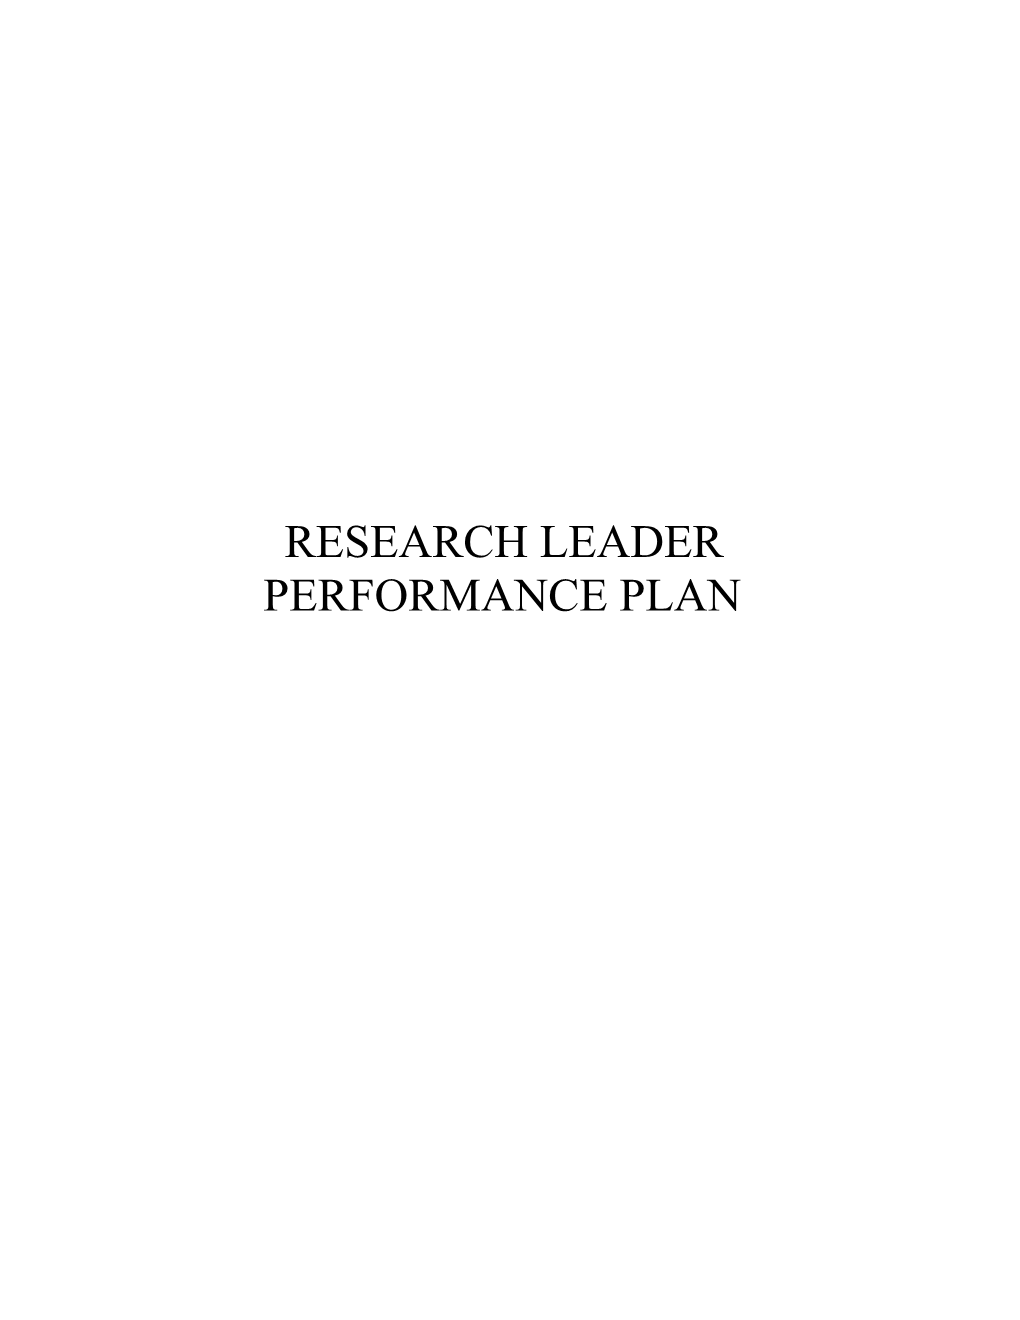 Performance Plan, Progress Review and Appraisal Worksheet (Rl 10-19-12)